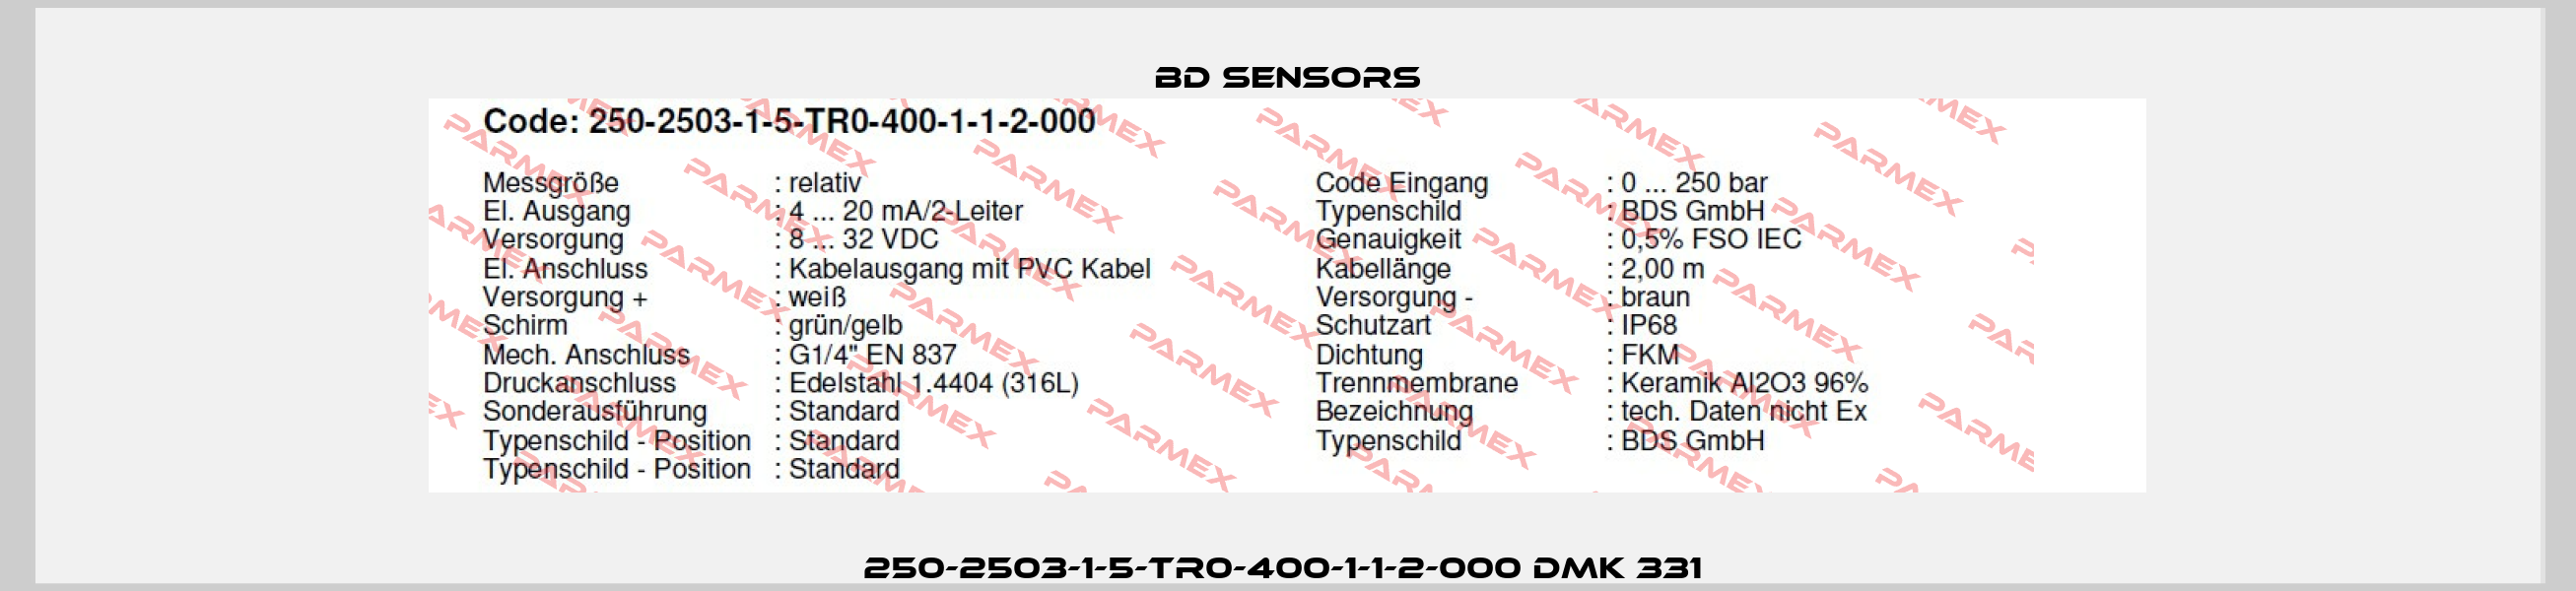 250-2503-1-5-TR0-400-1-1-2-000 DMK 331  Bd Sensors